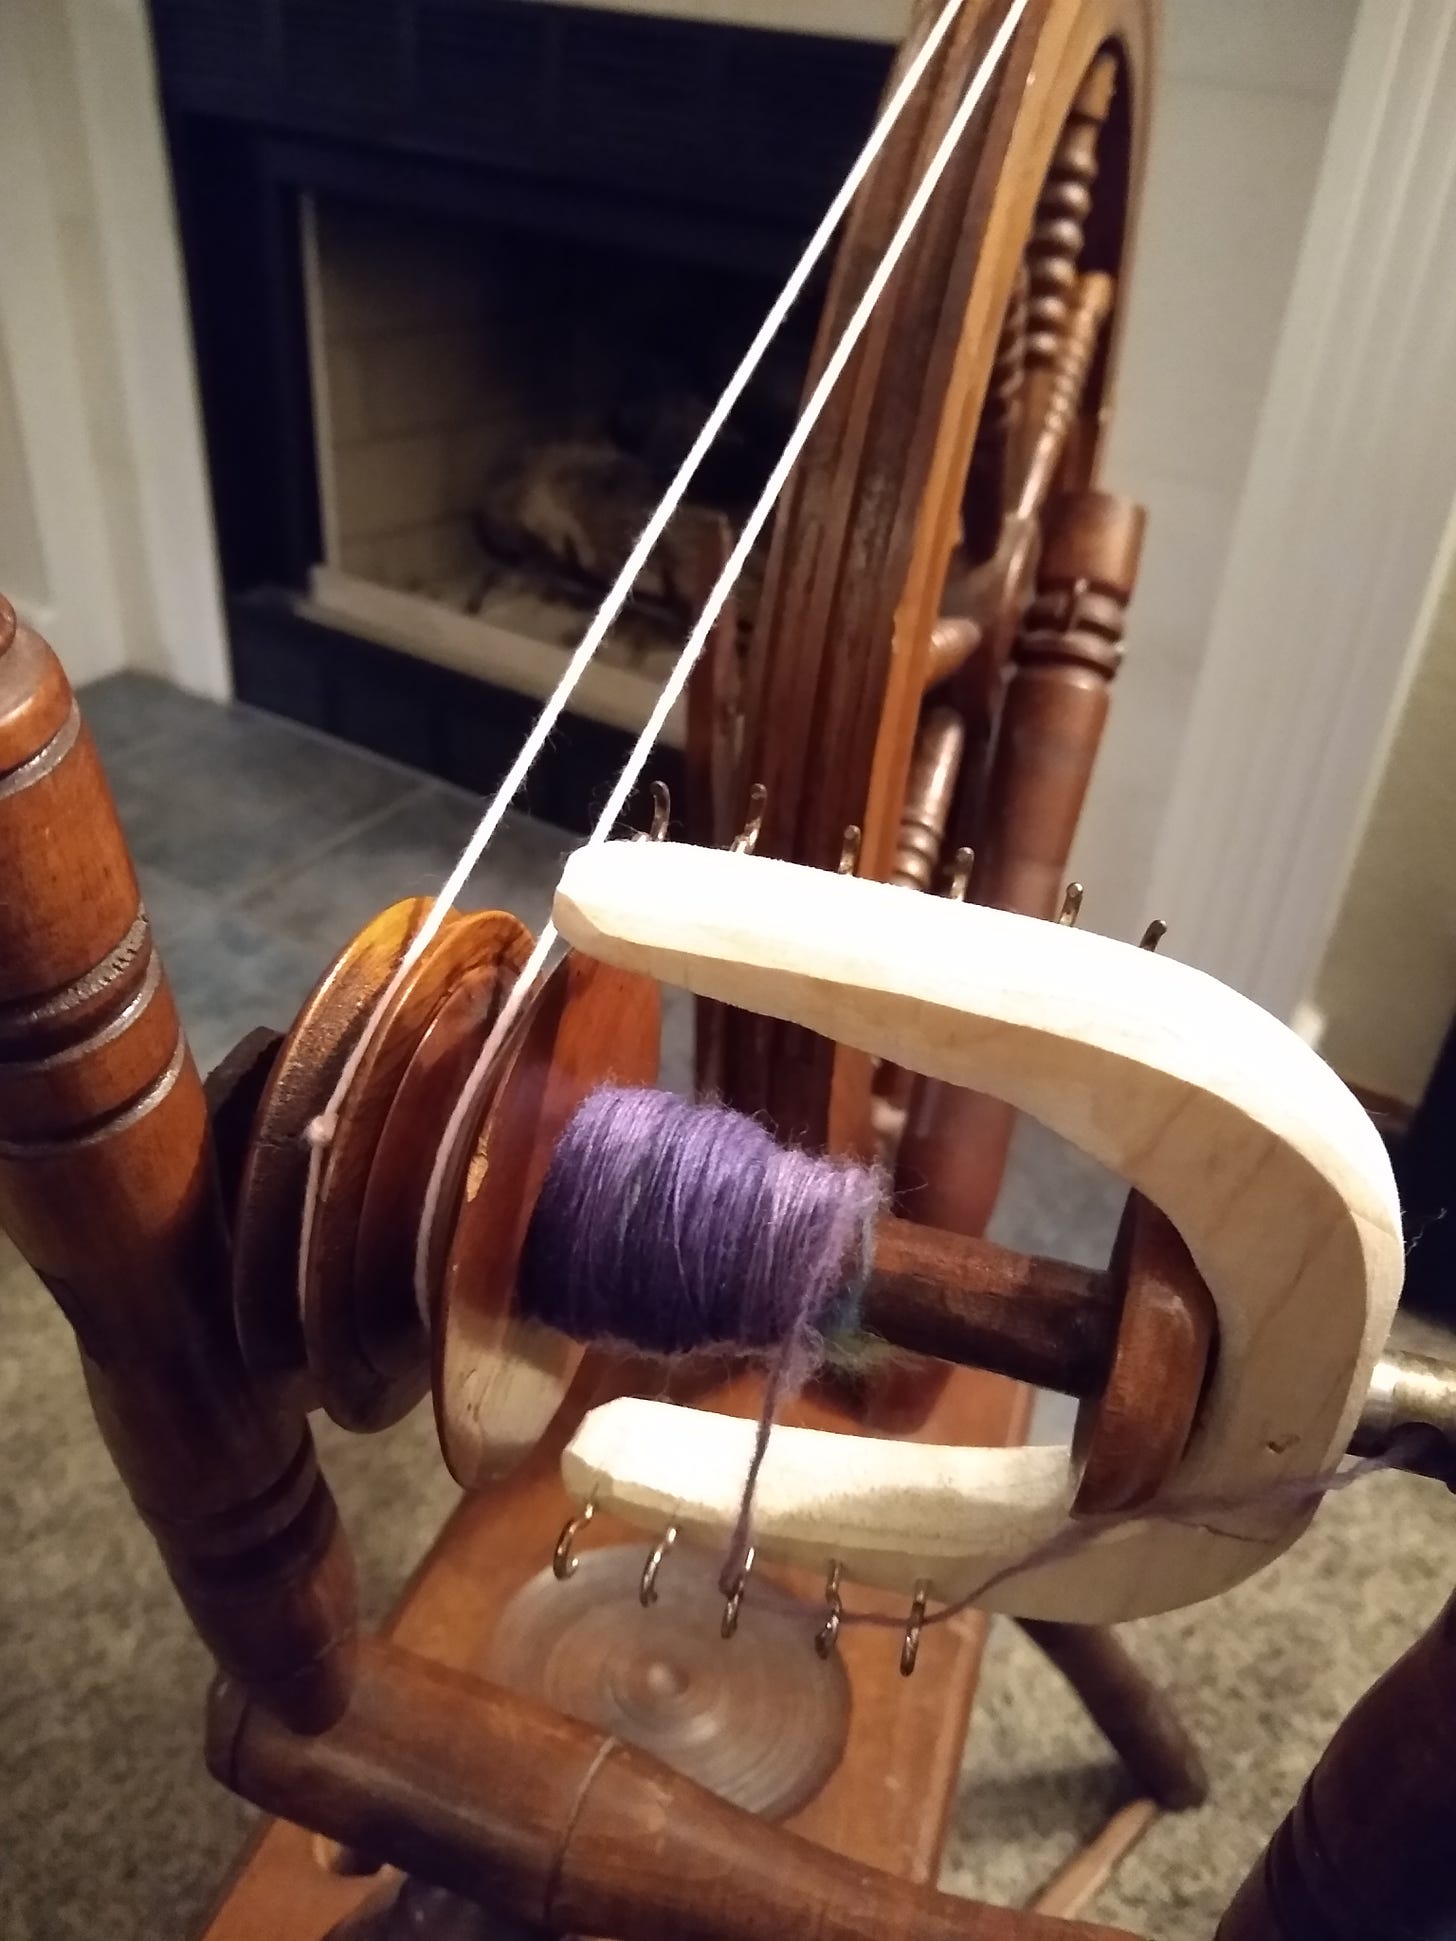 Spinning wheel with purple yarn on the bobbin